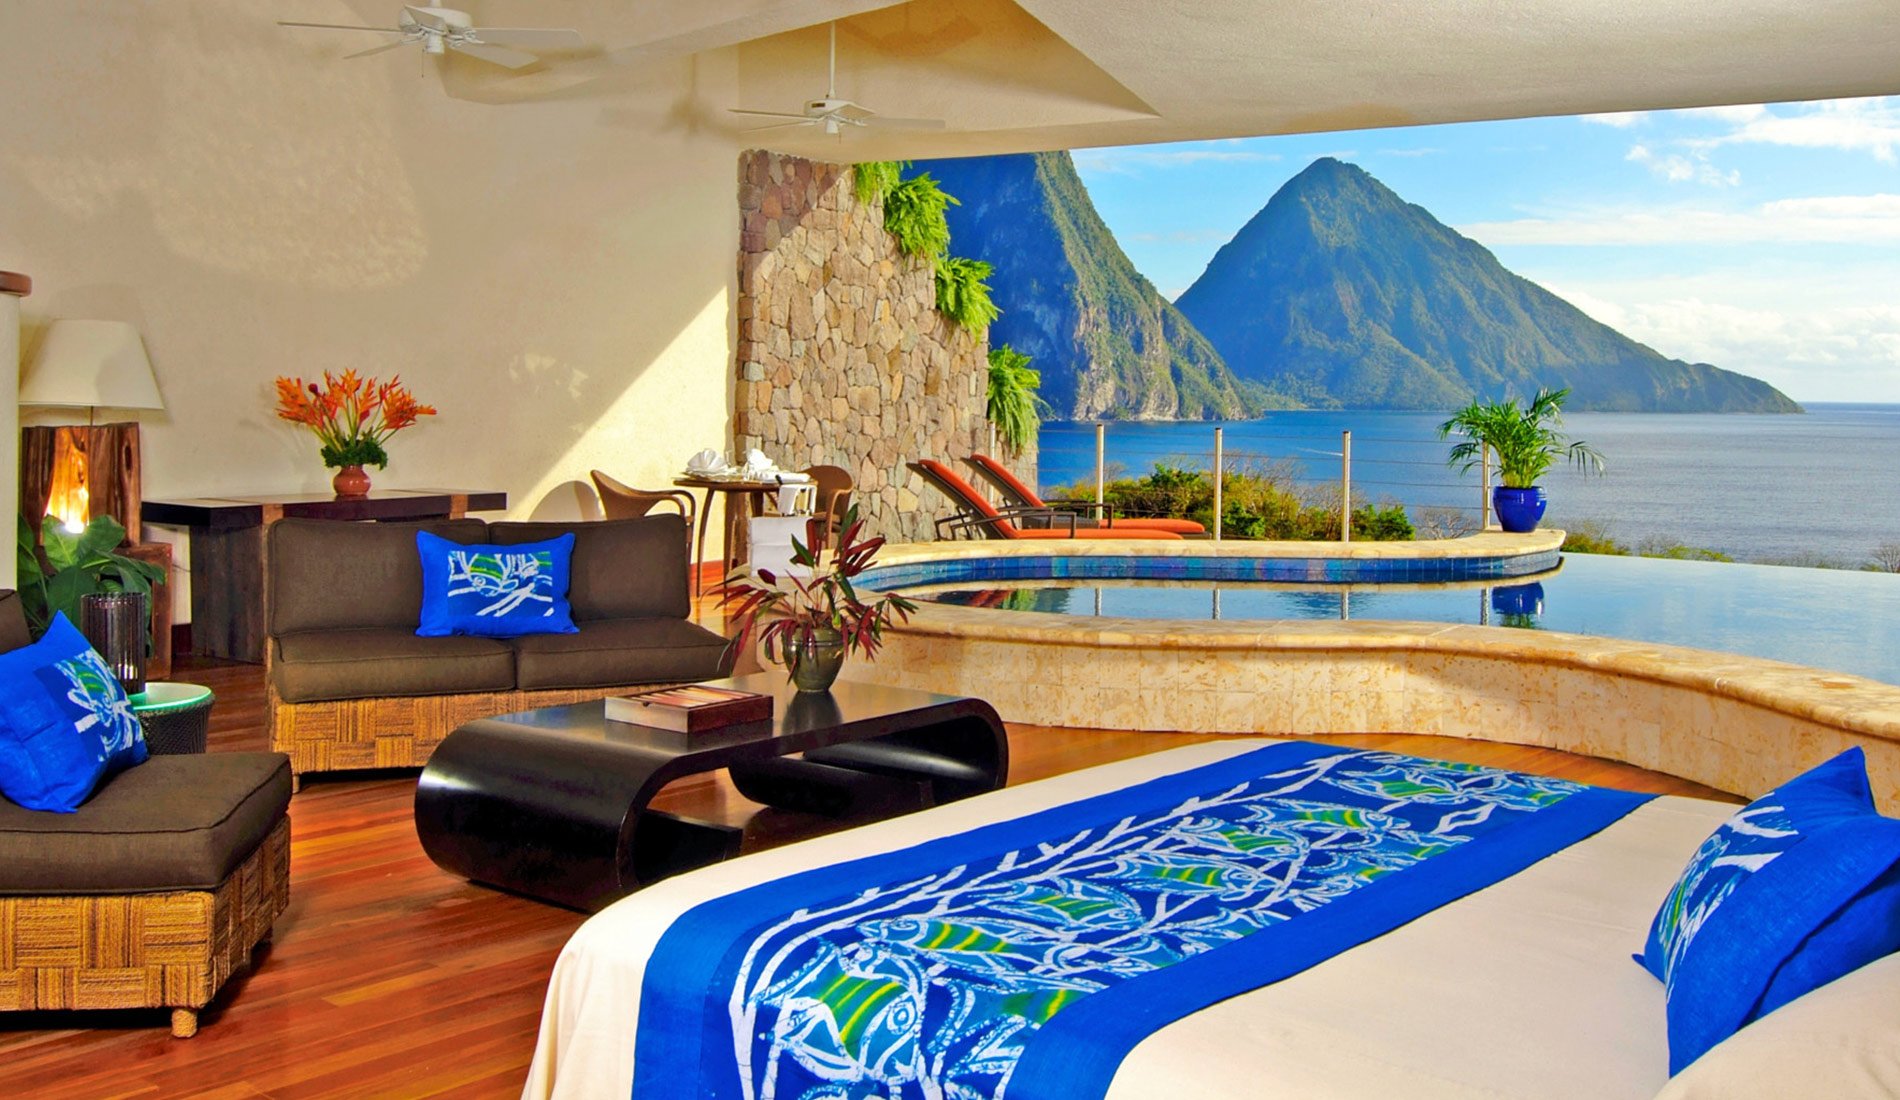 Hôtel de luxe Jade Mountain resort 5 étoiles Sainte-Lucie caraïbes chambre